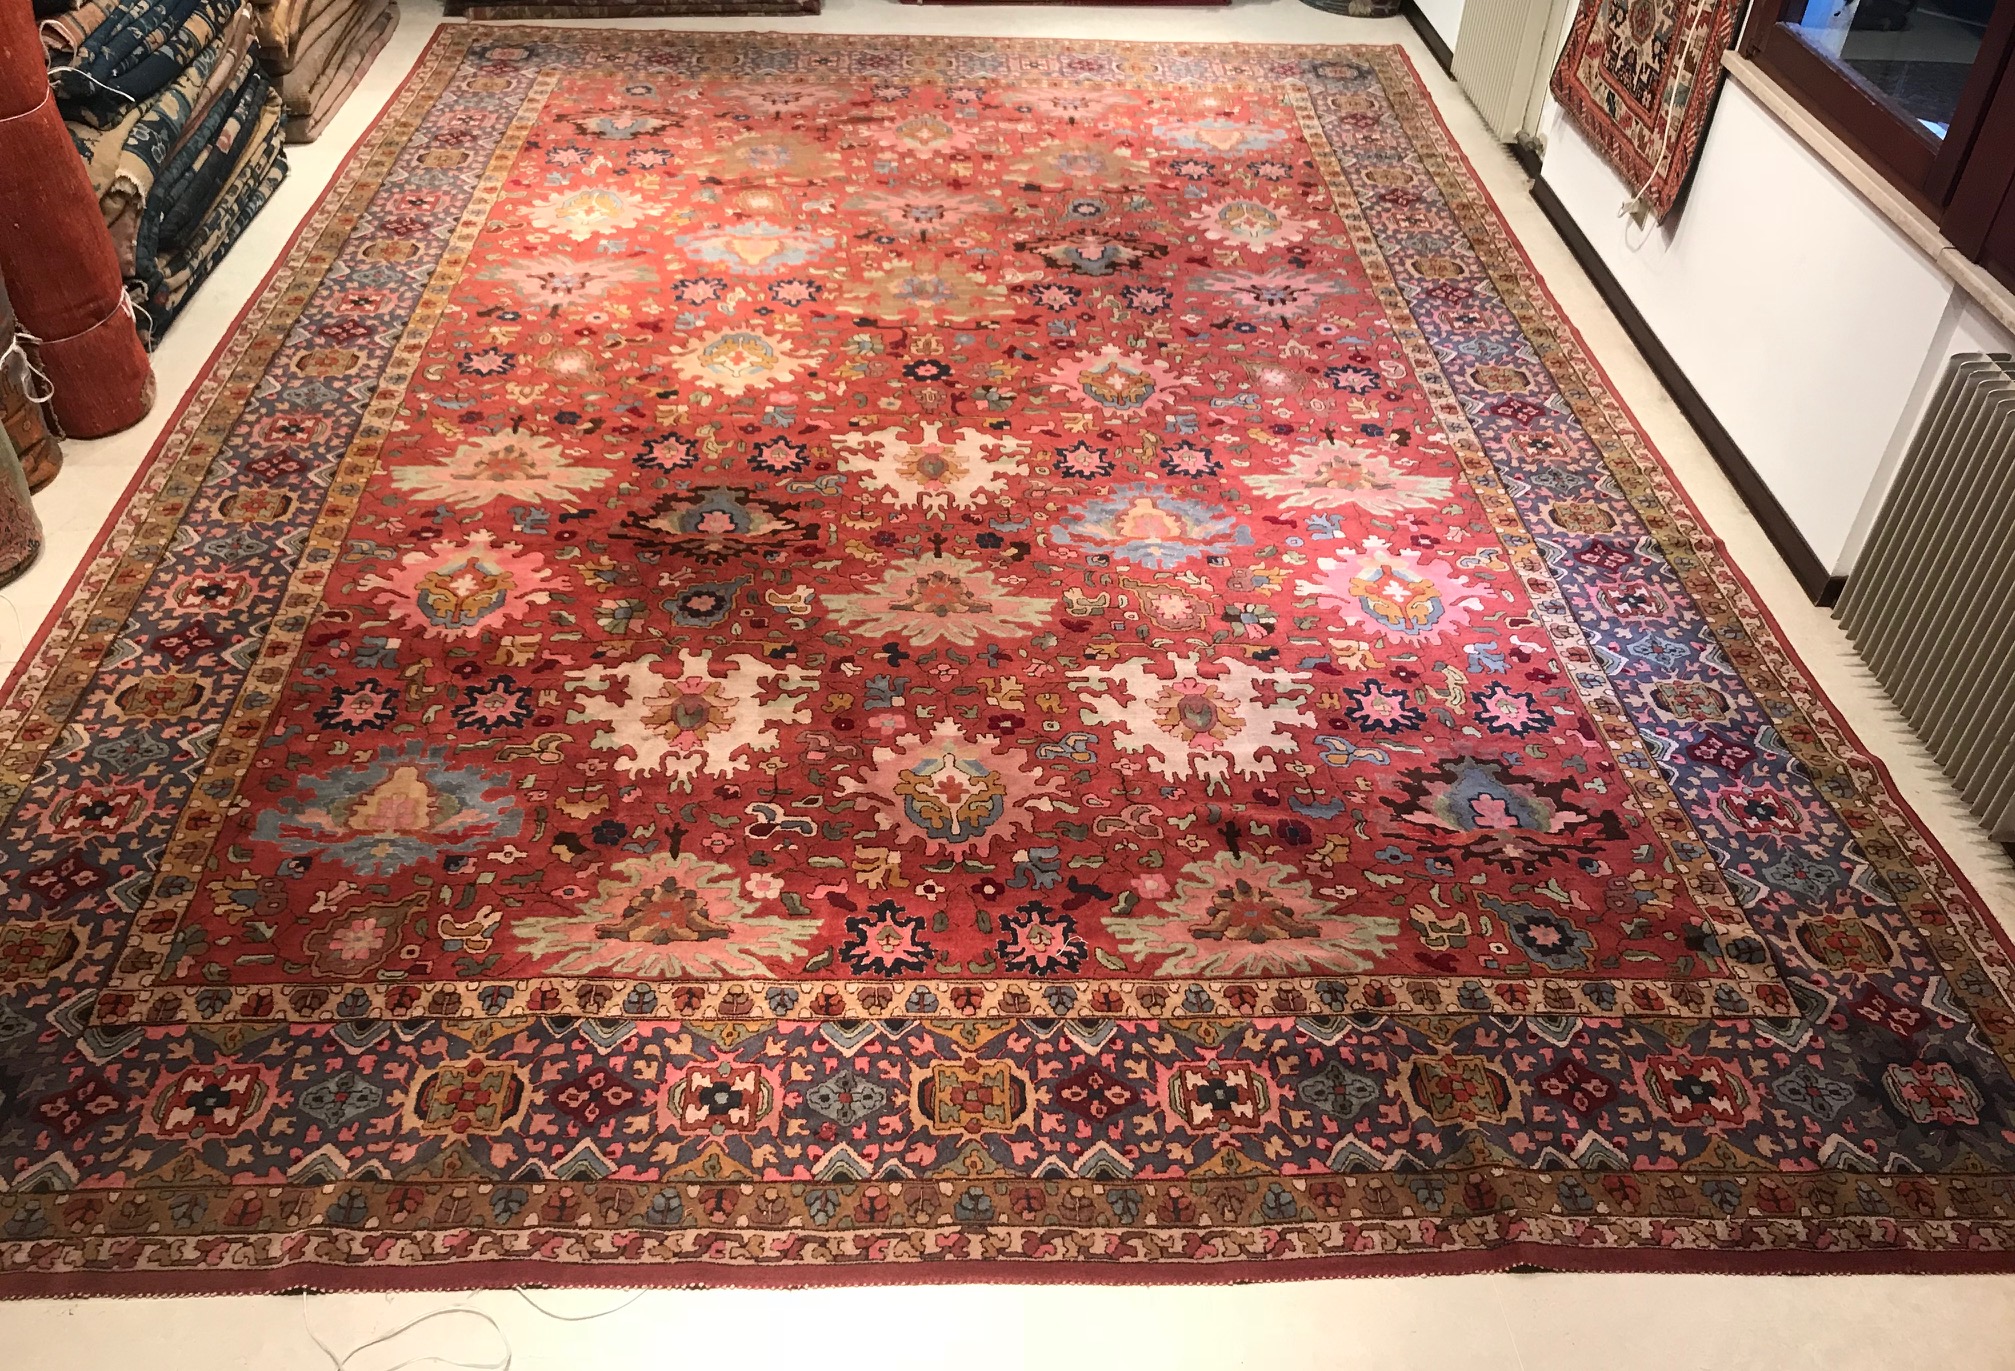 Antique hooked Carpet - # 54623